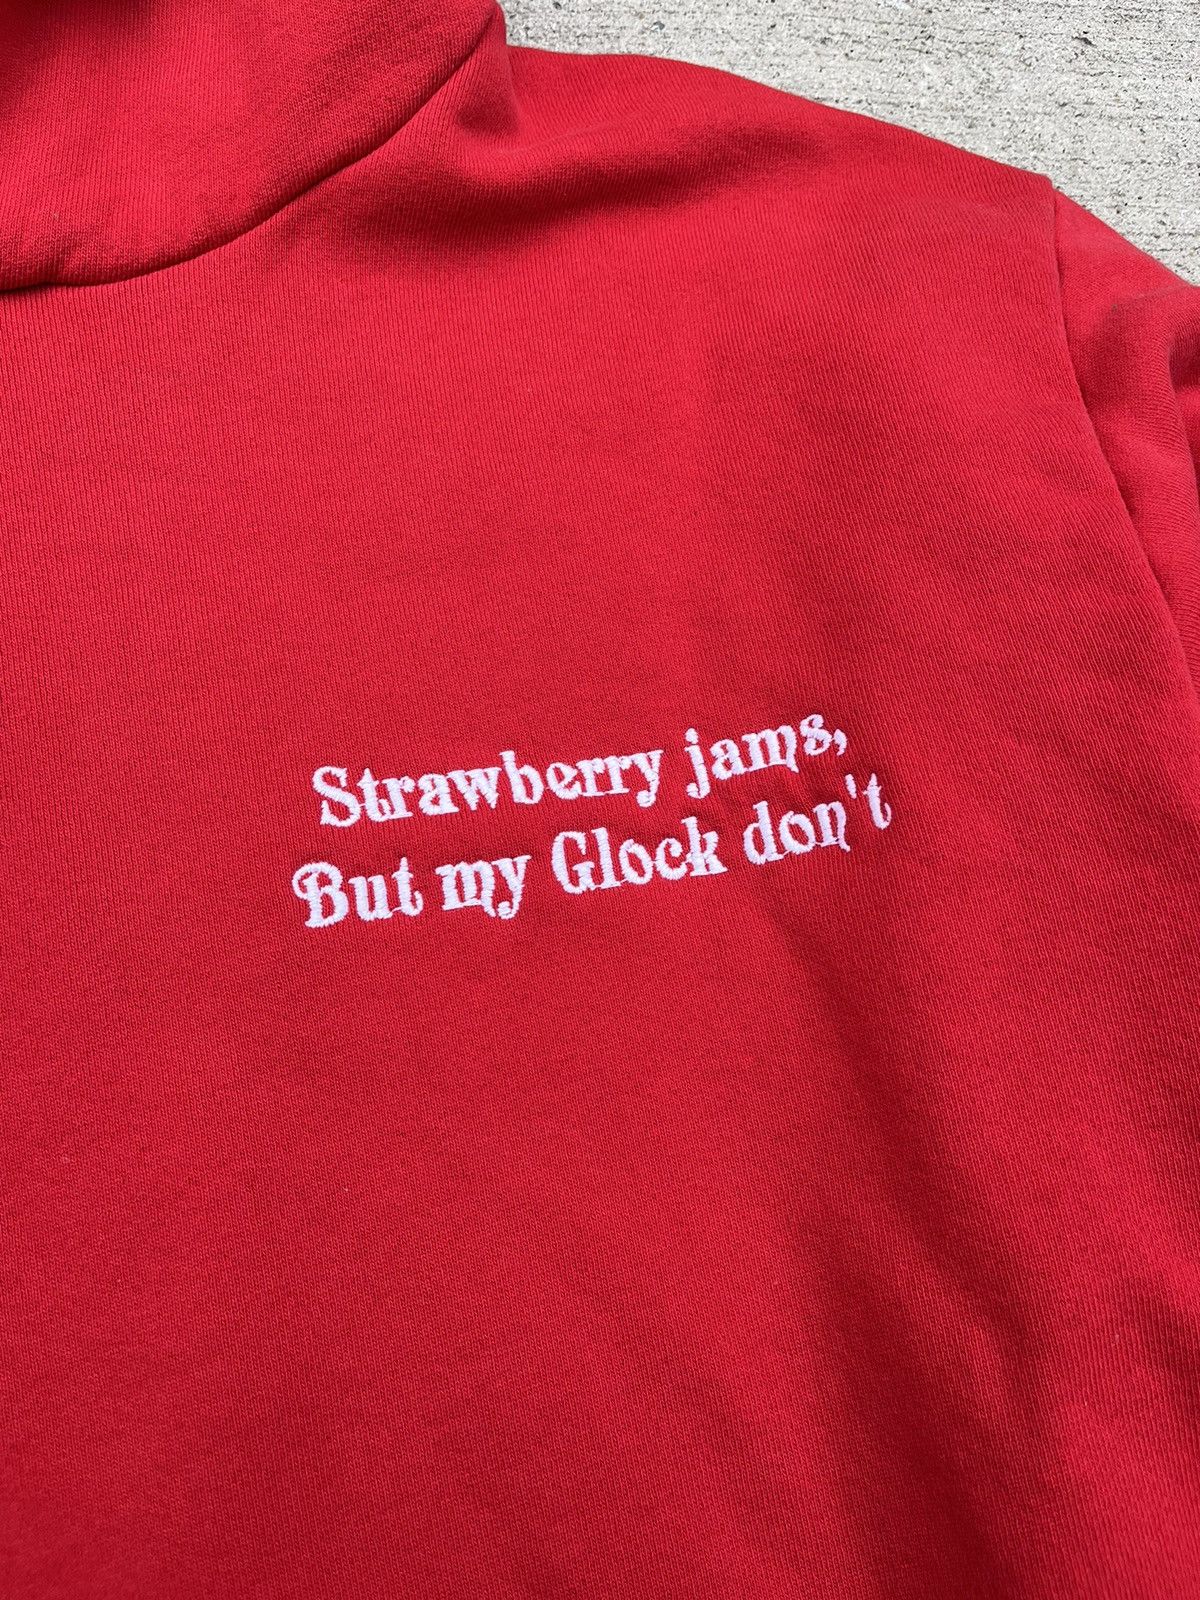 Designer Strawberry Jams Glock Hoodie Size US S / EU 44-46 / 1 - 4 Thumbnail